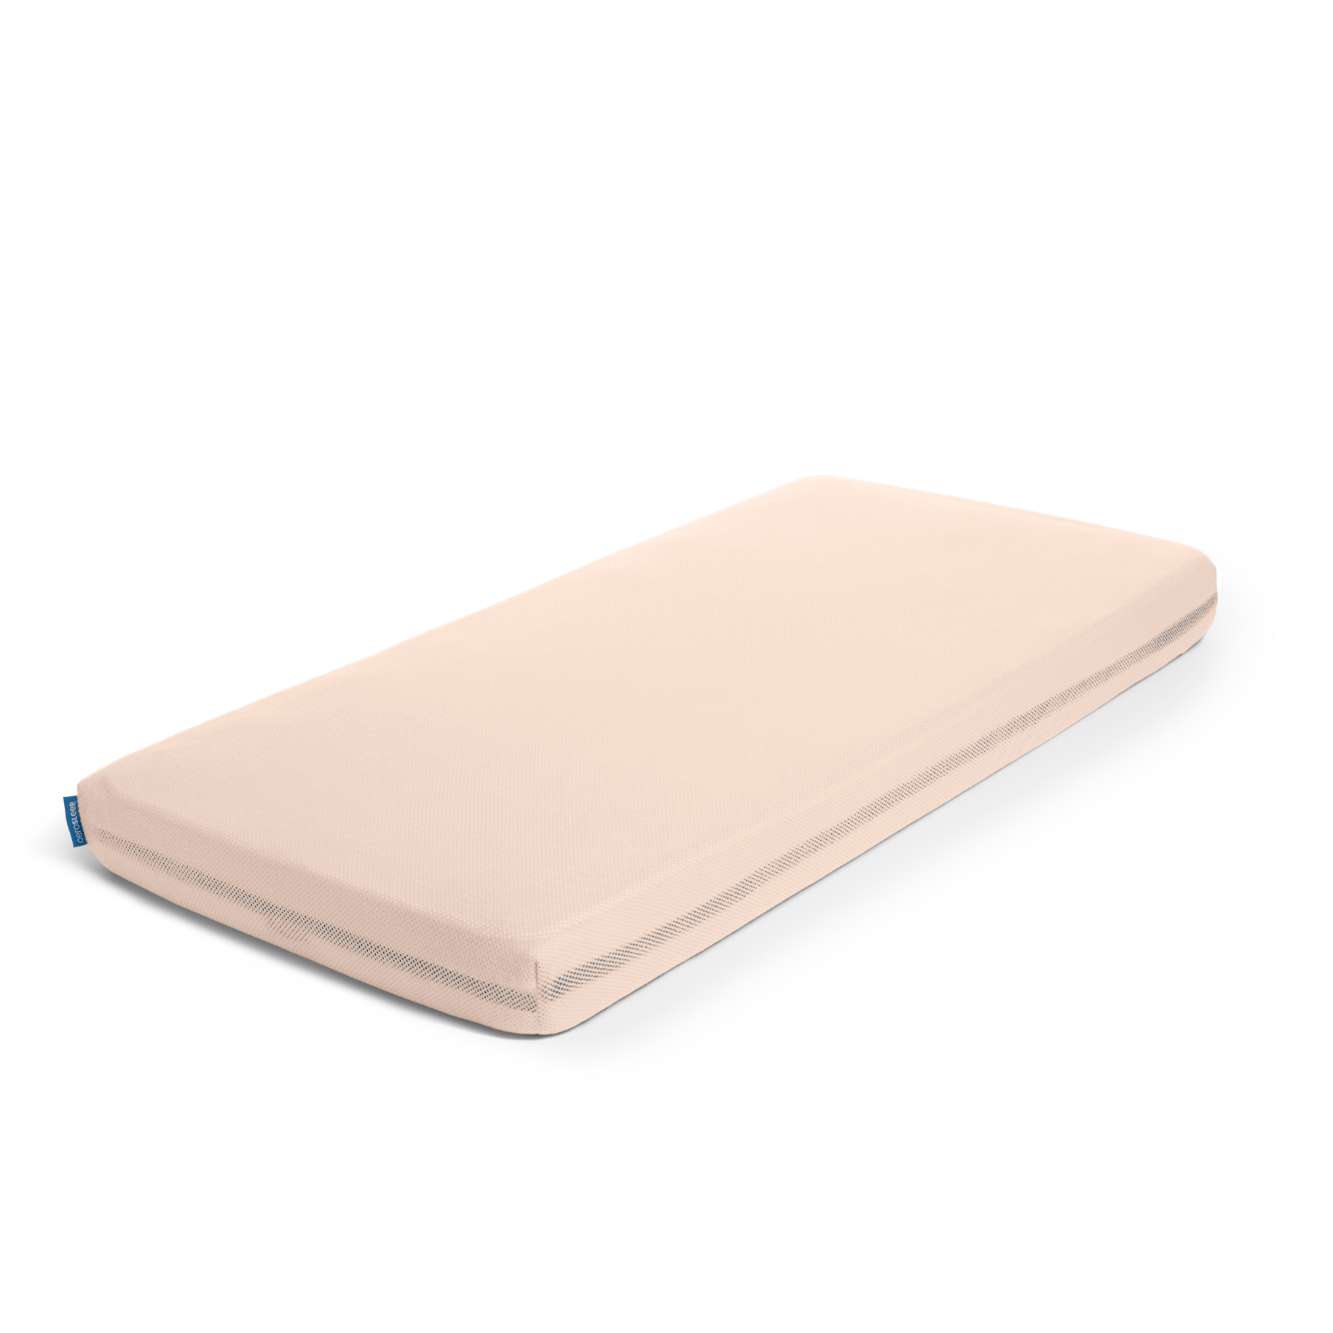 AeroSleep® hoeslaken - bed - 140 x 70 cm - Peach